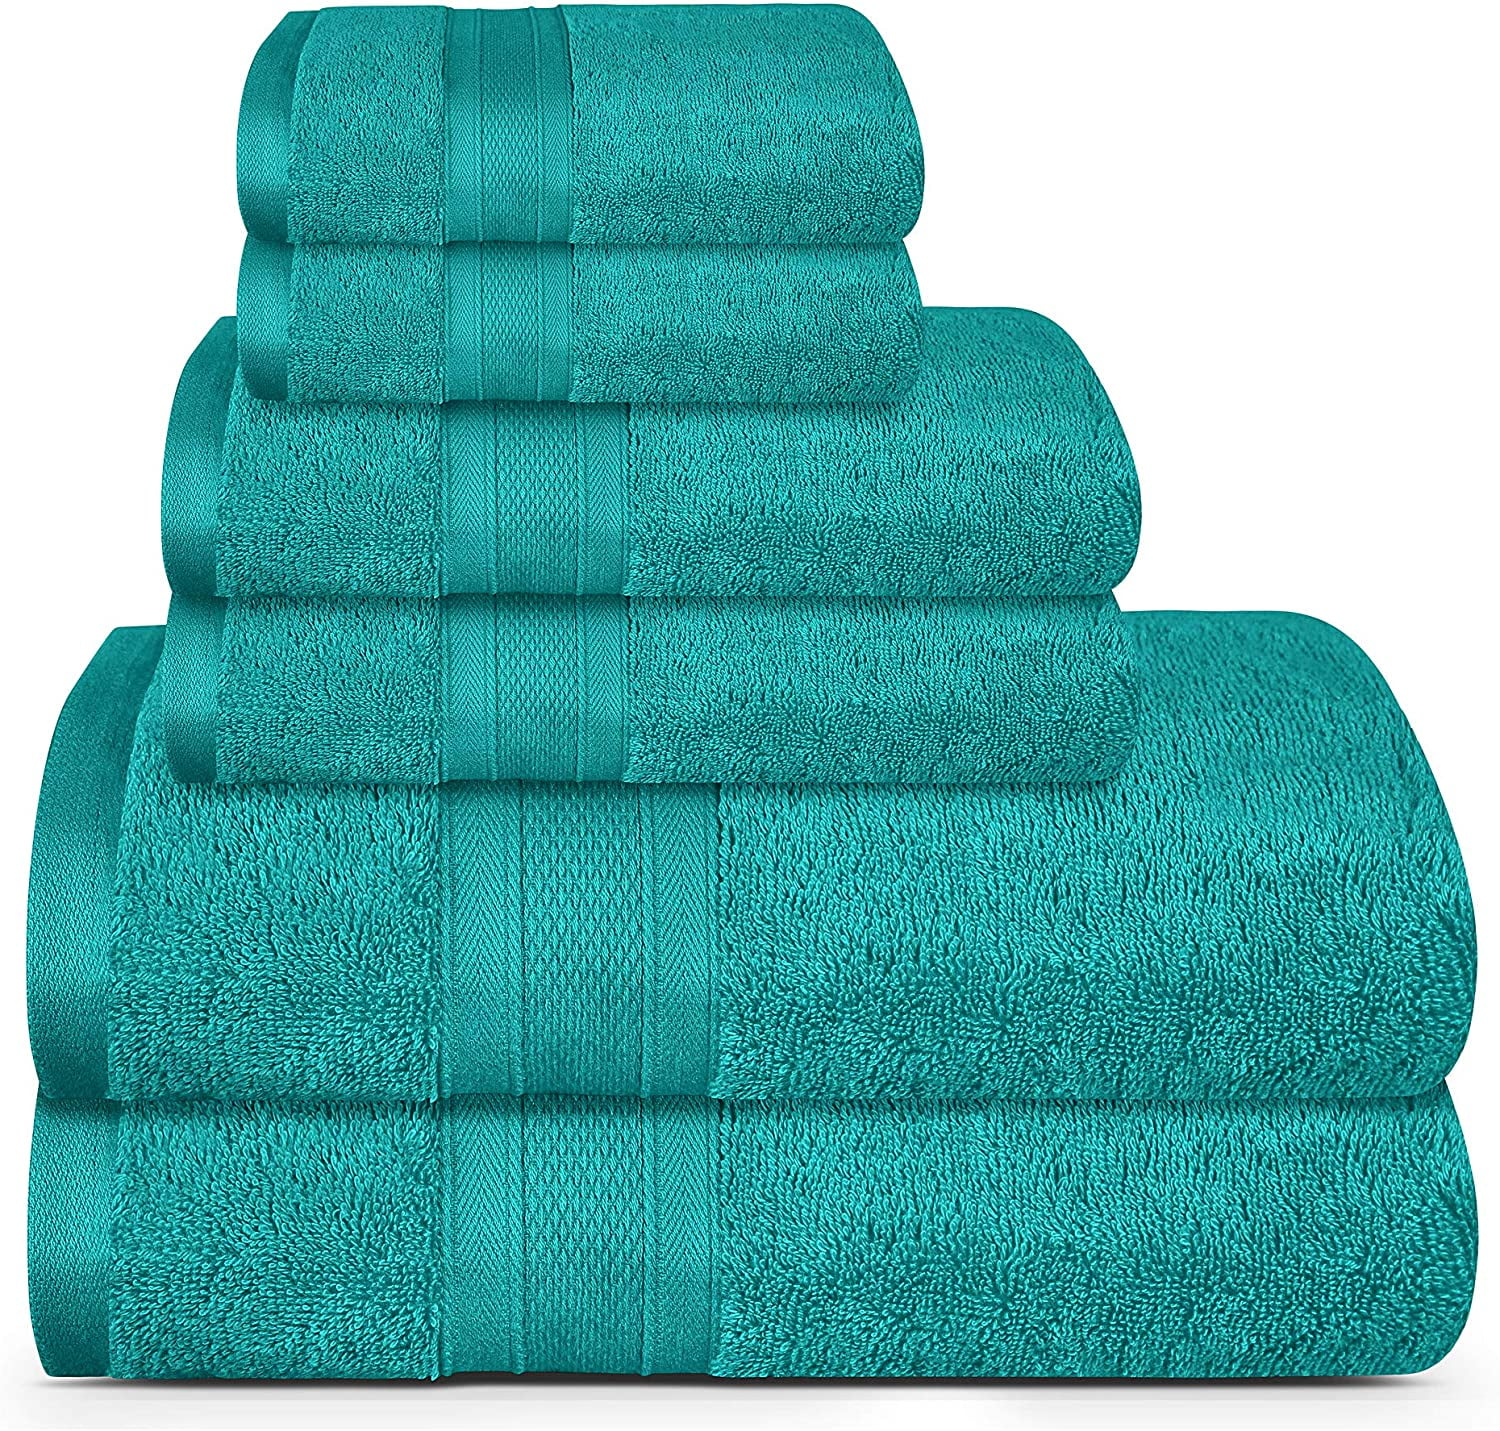 Bath Towe And Bath Sheets 500Gsm Super Soft Egyptian Cotton Hand Towel 